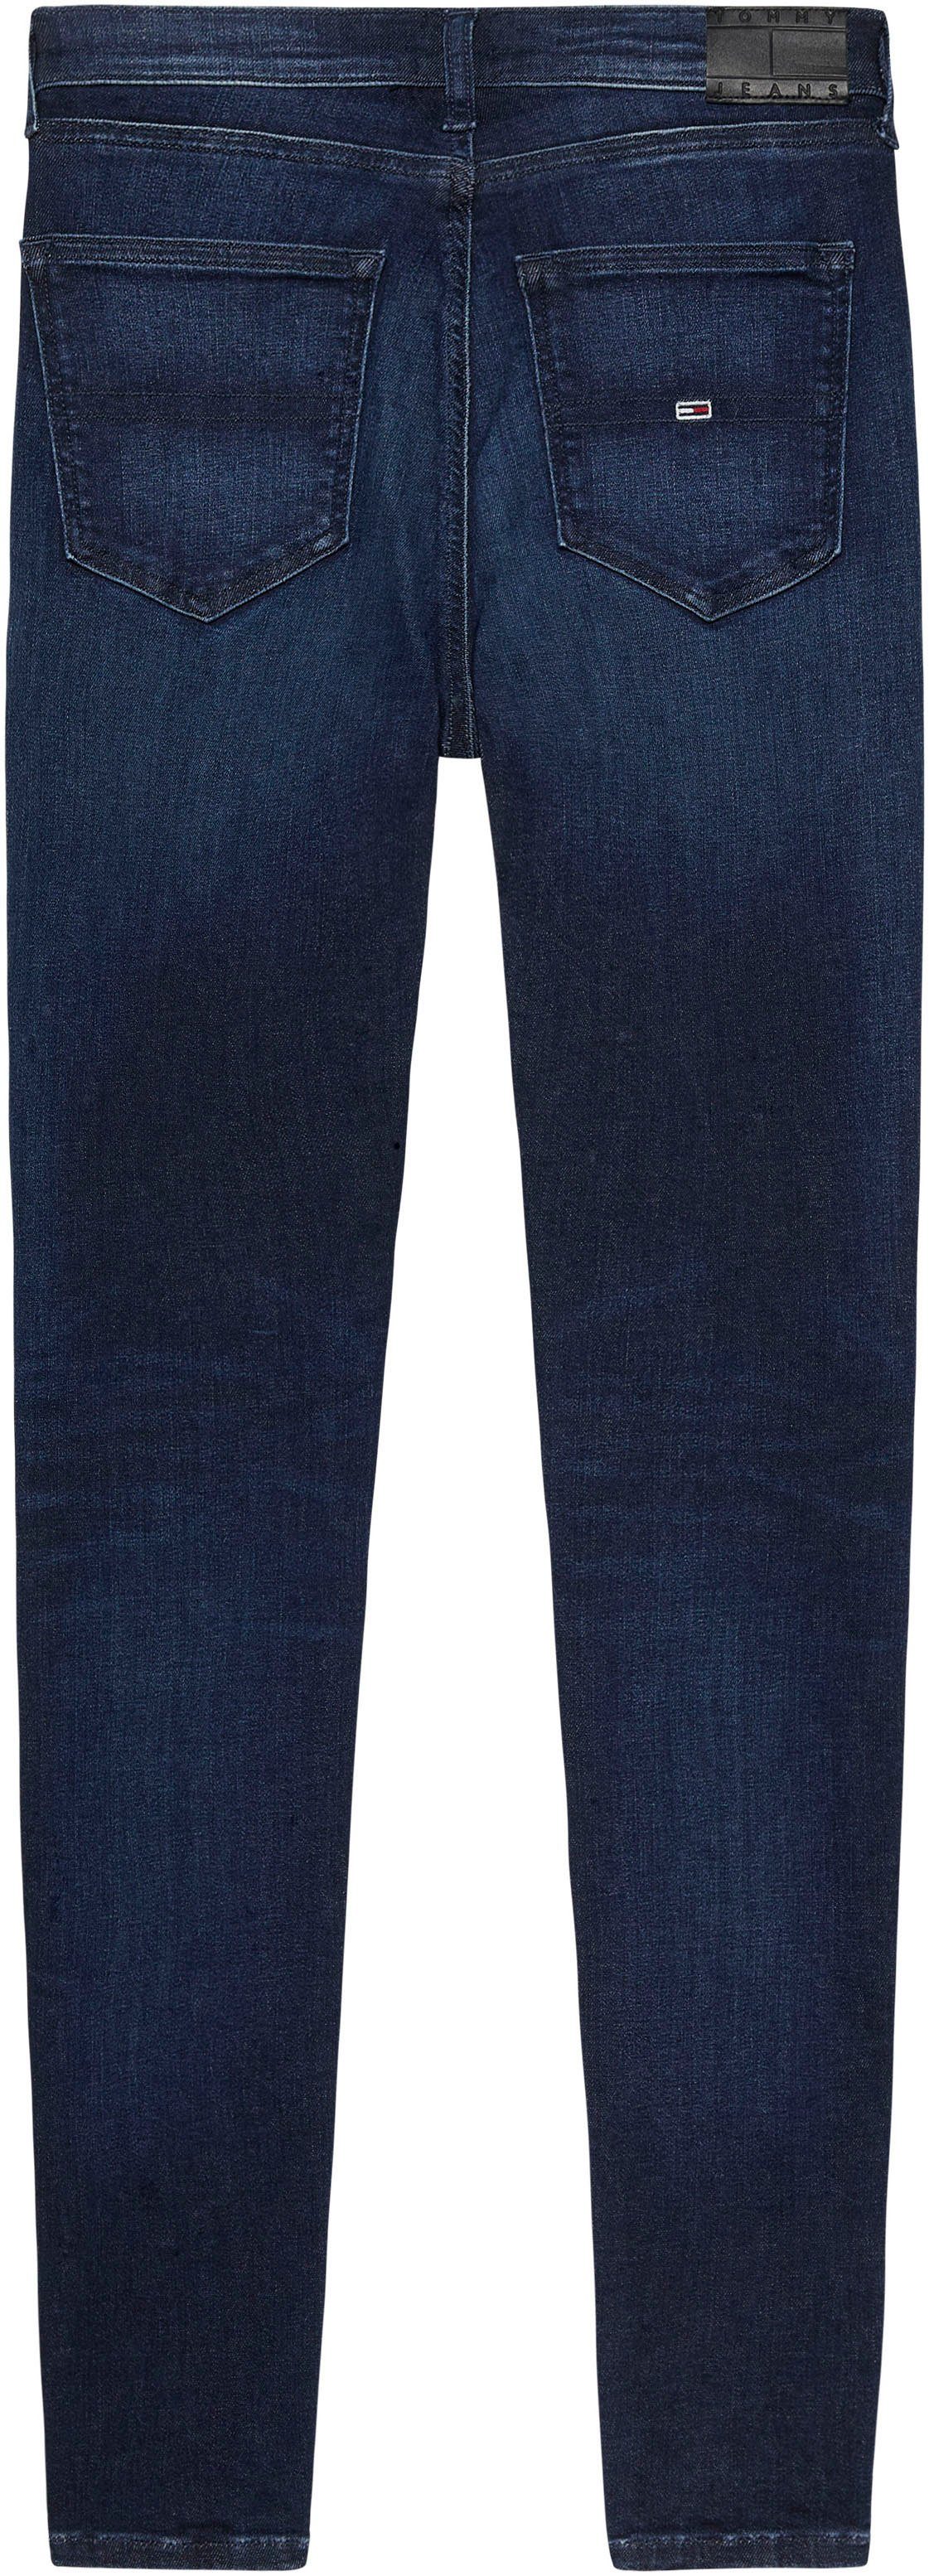 Ledermarkenlabel Dark Jeans Bequeme mit Tommy Sylvia Jeans Denim1